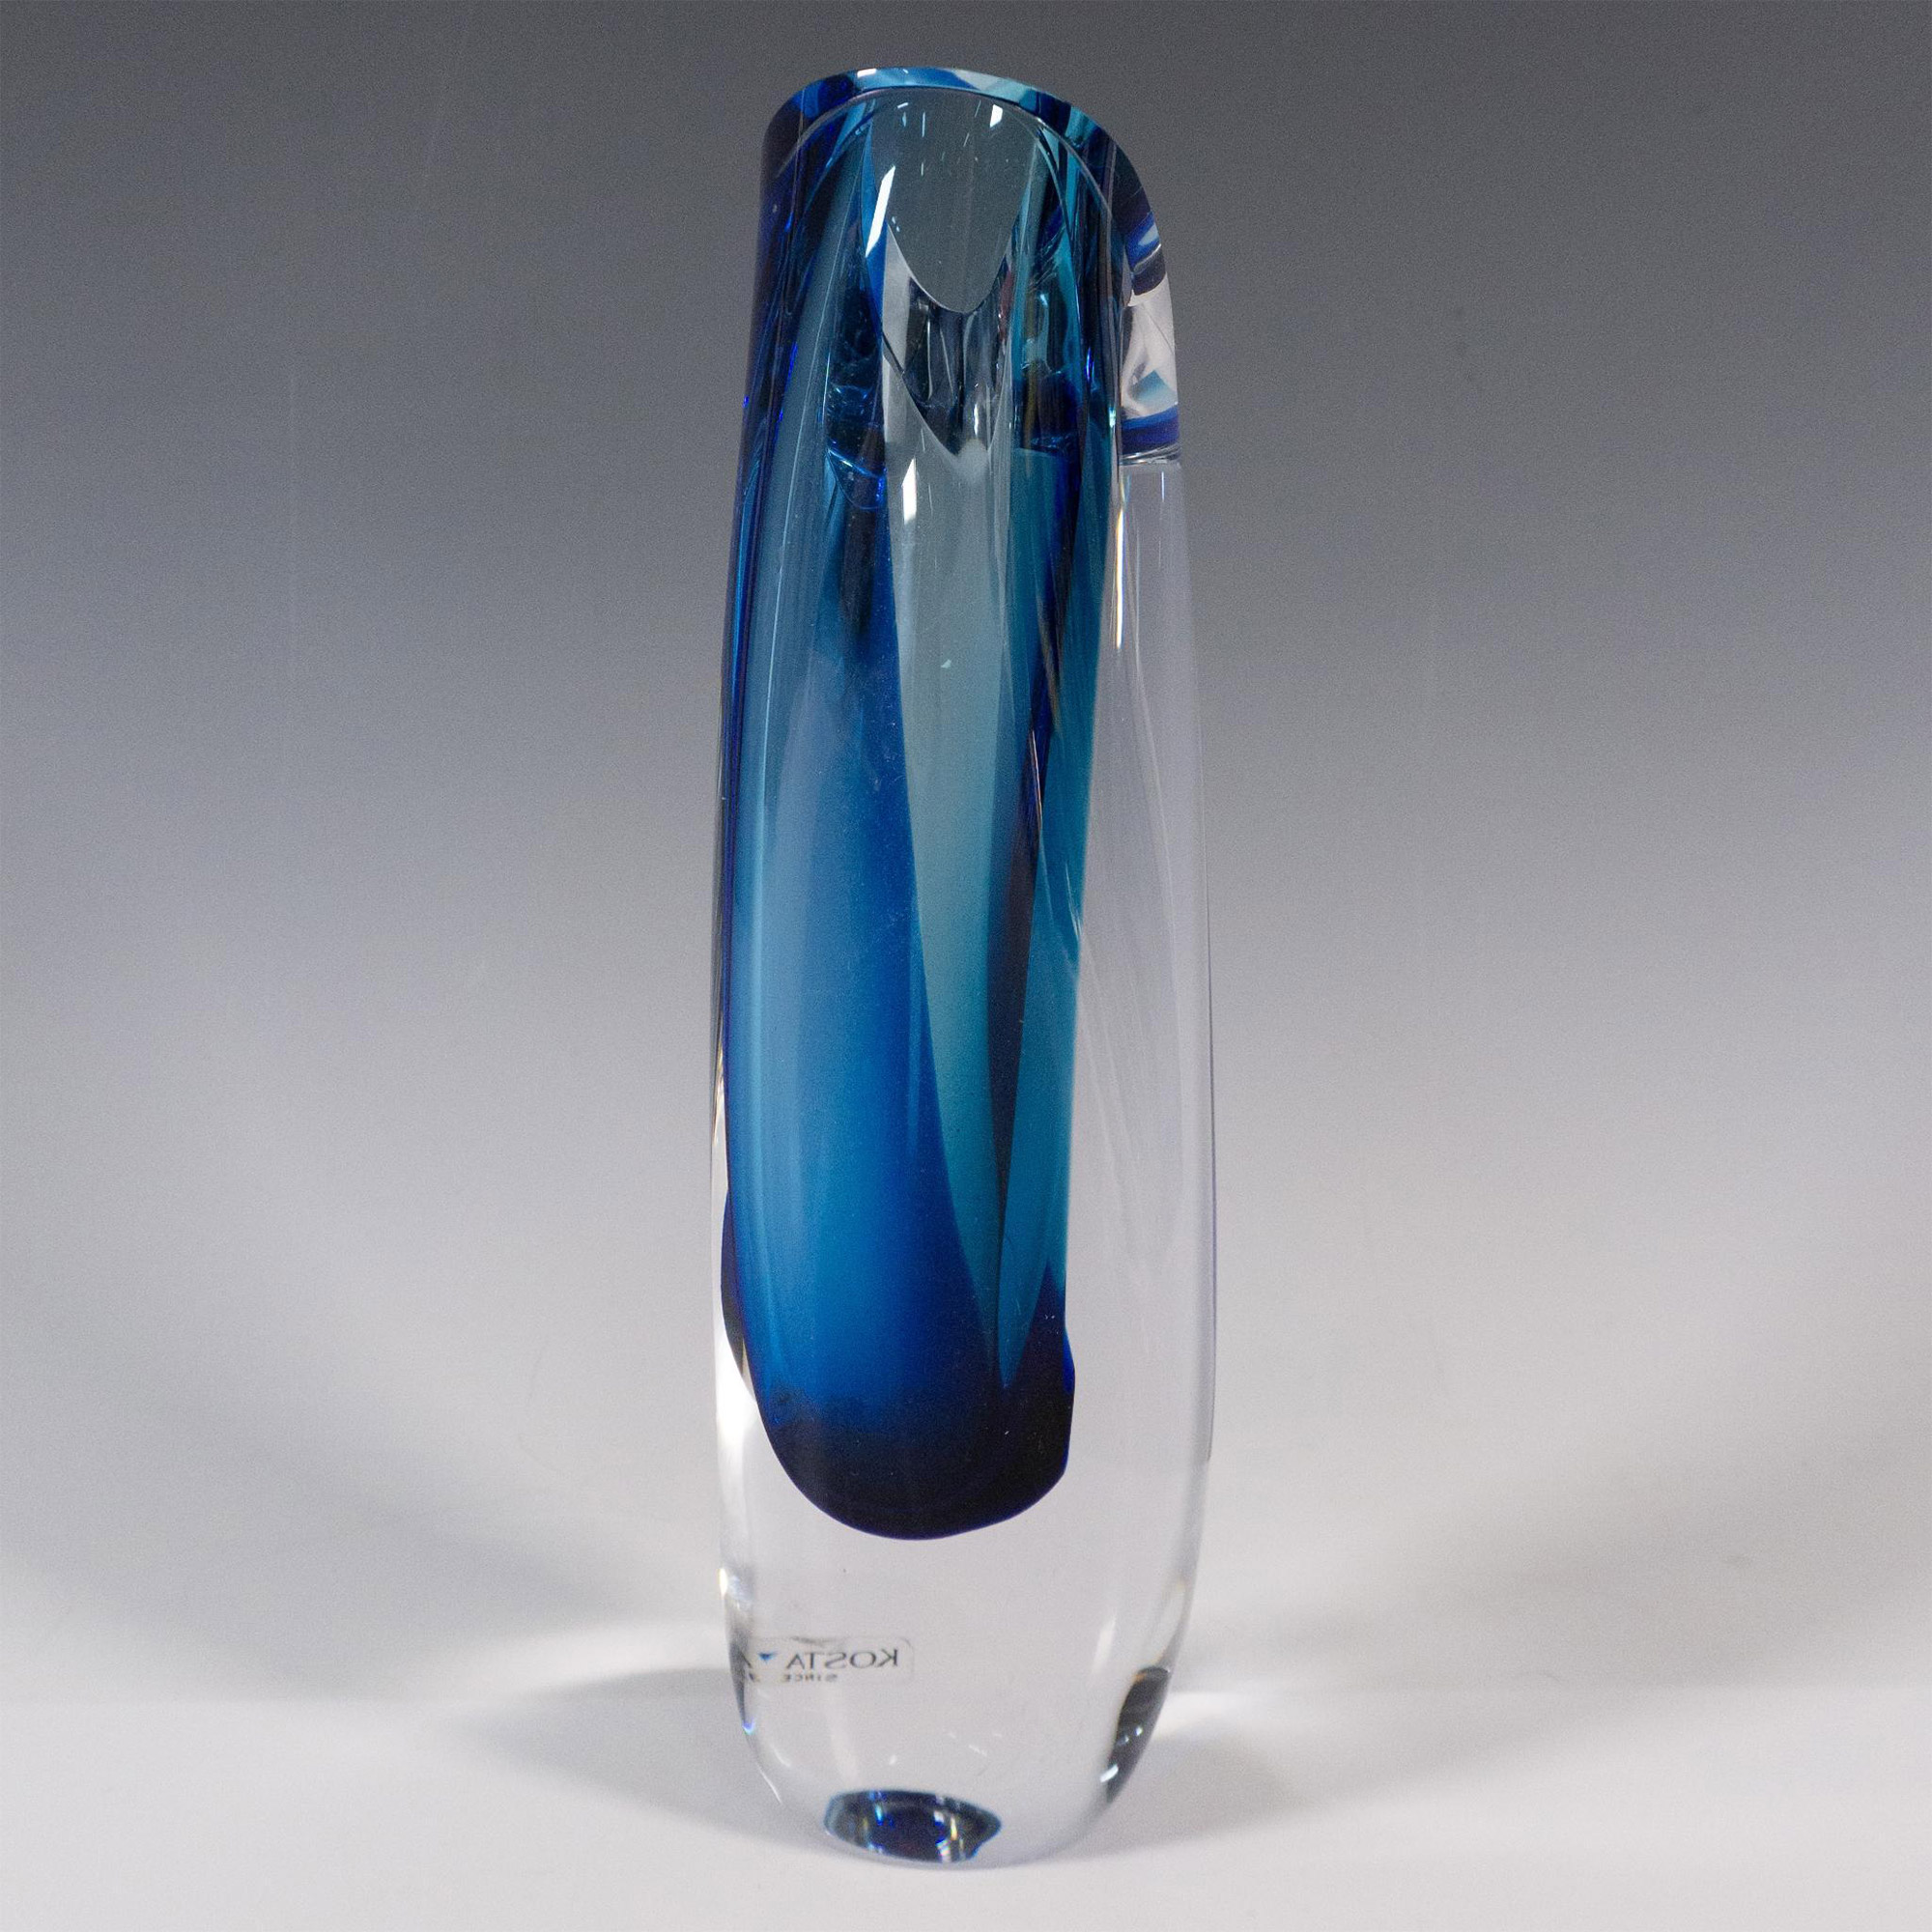 Kosta Boda by Goran Warff Blue Vase, Seaside - Image 2 of 3